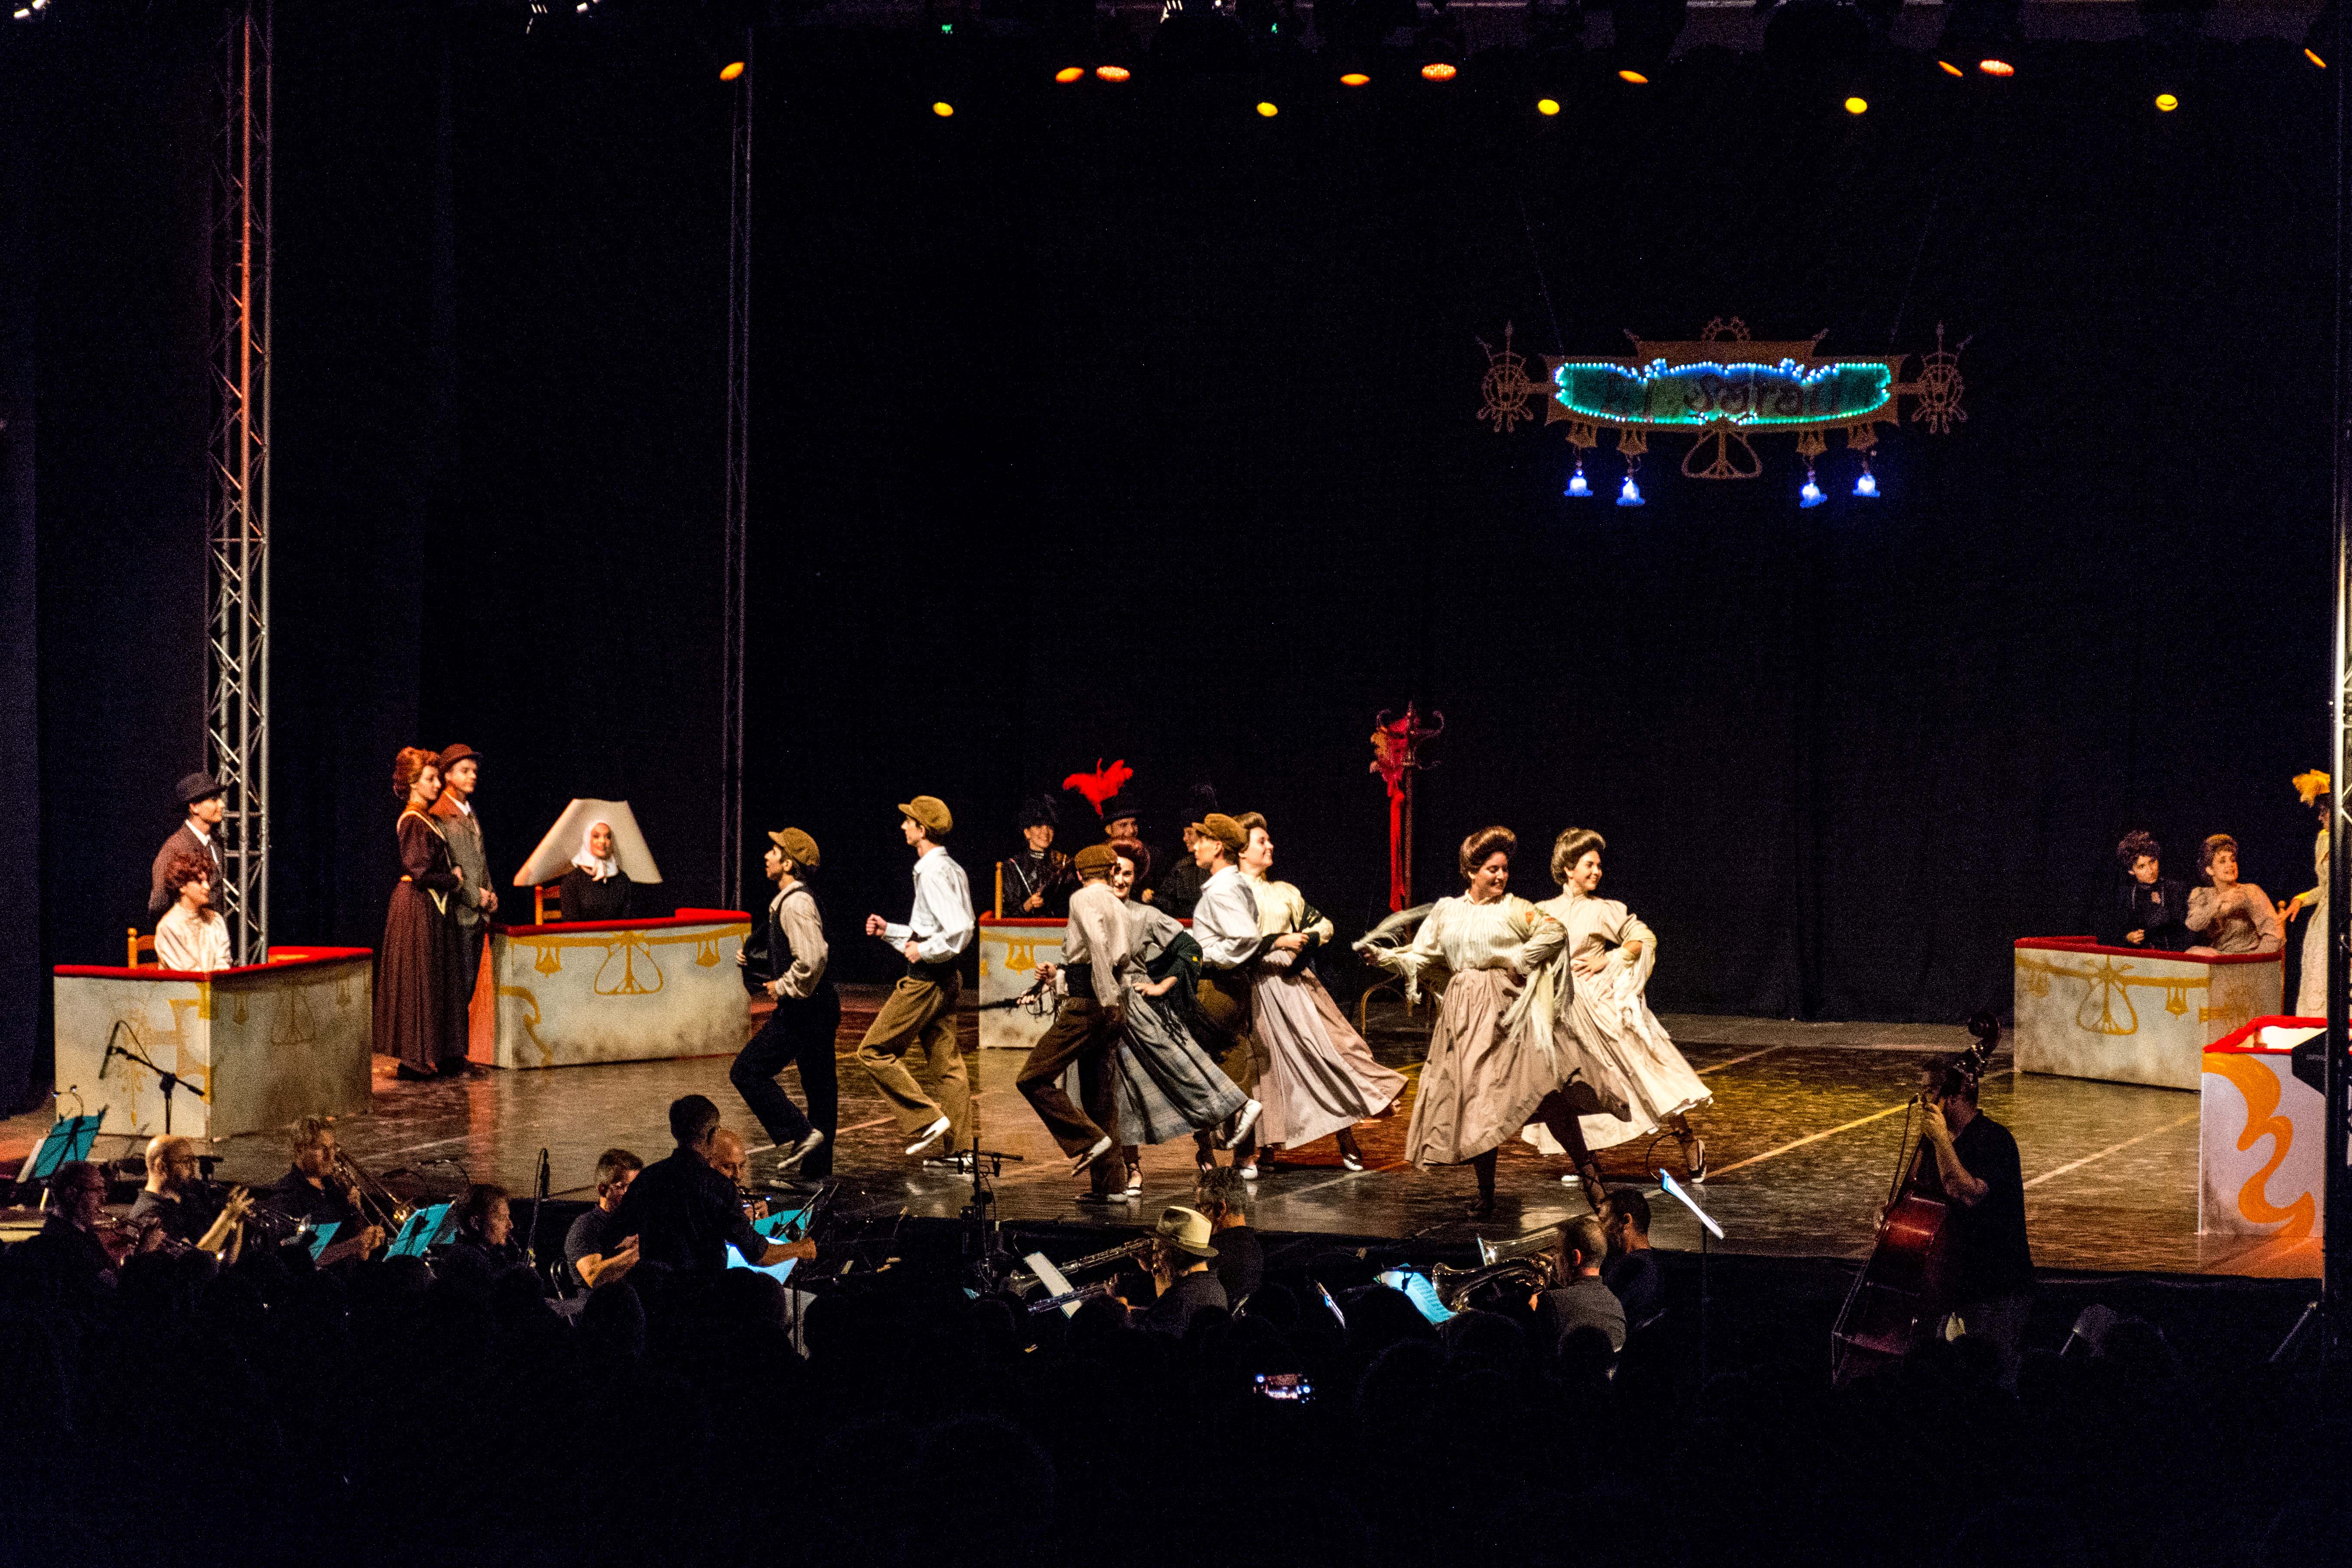 Actuació de l'Esbart Dansaire al Castell durant la Festa Major 2022. FOTO: Carmelo Jiménez